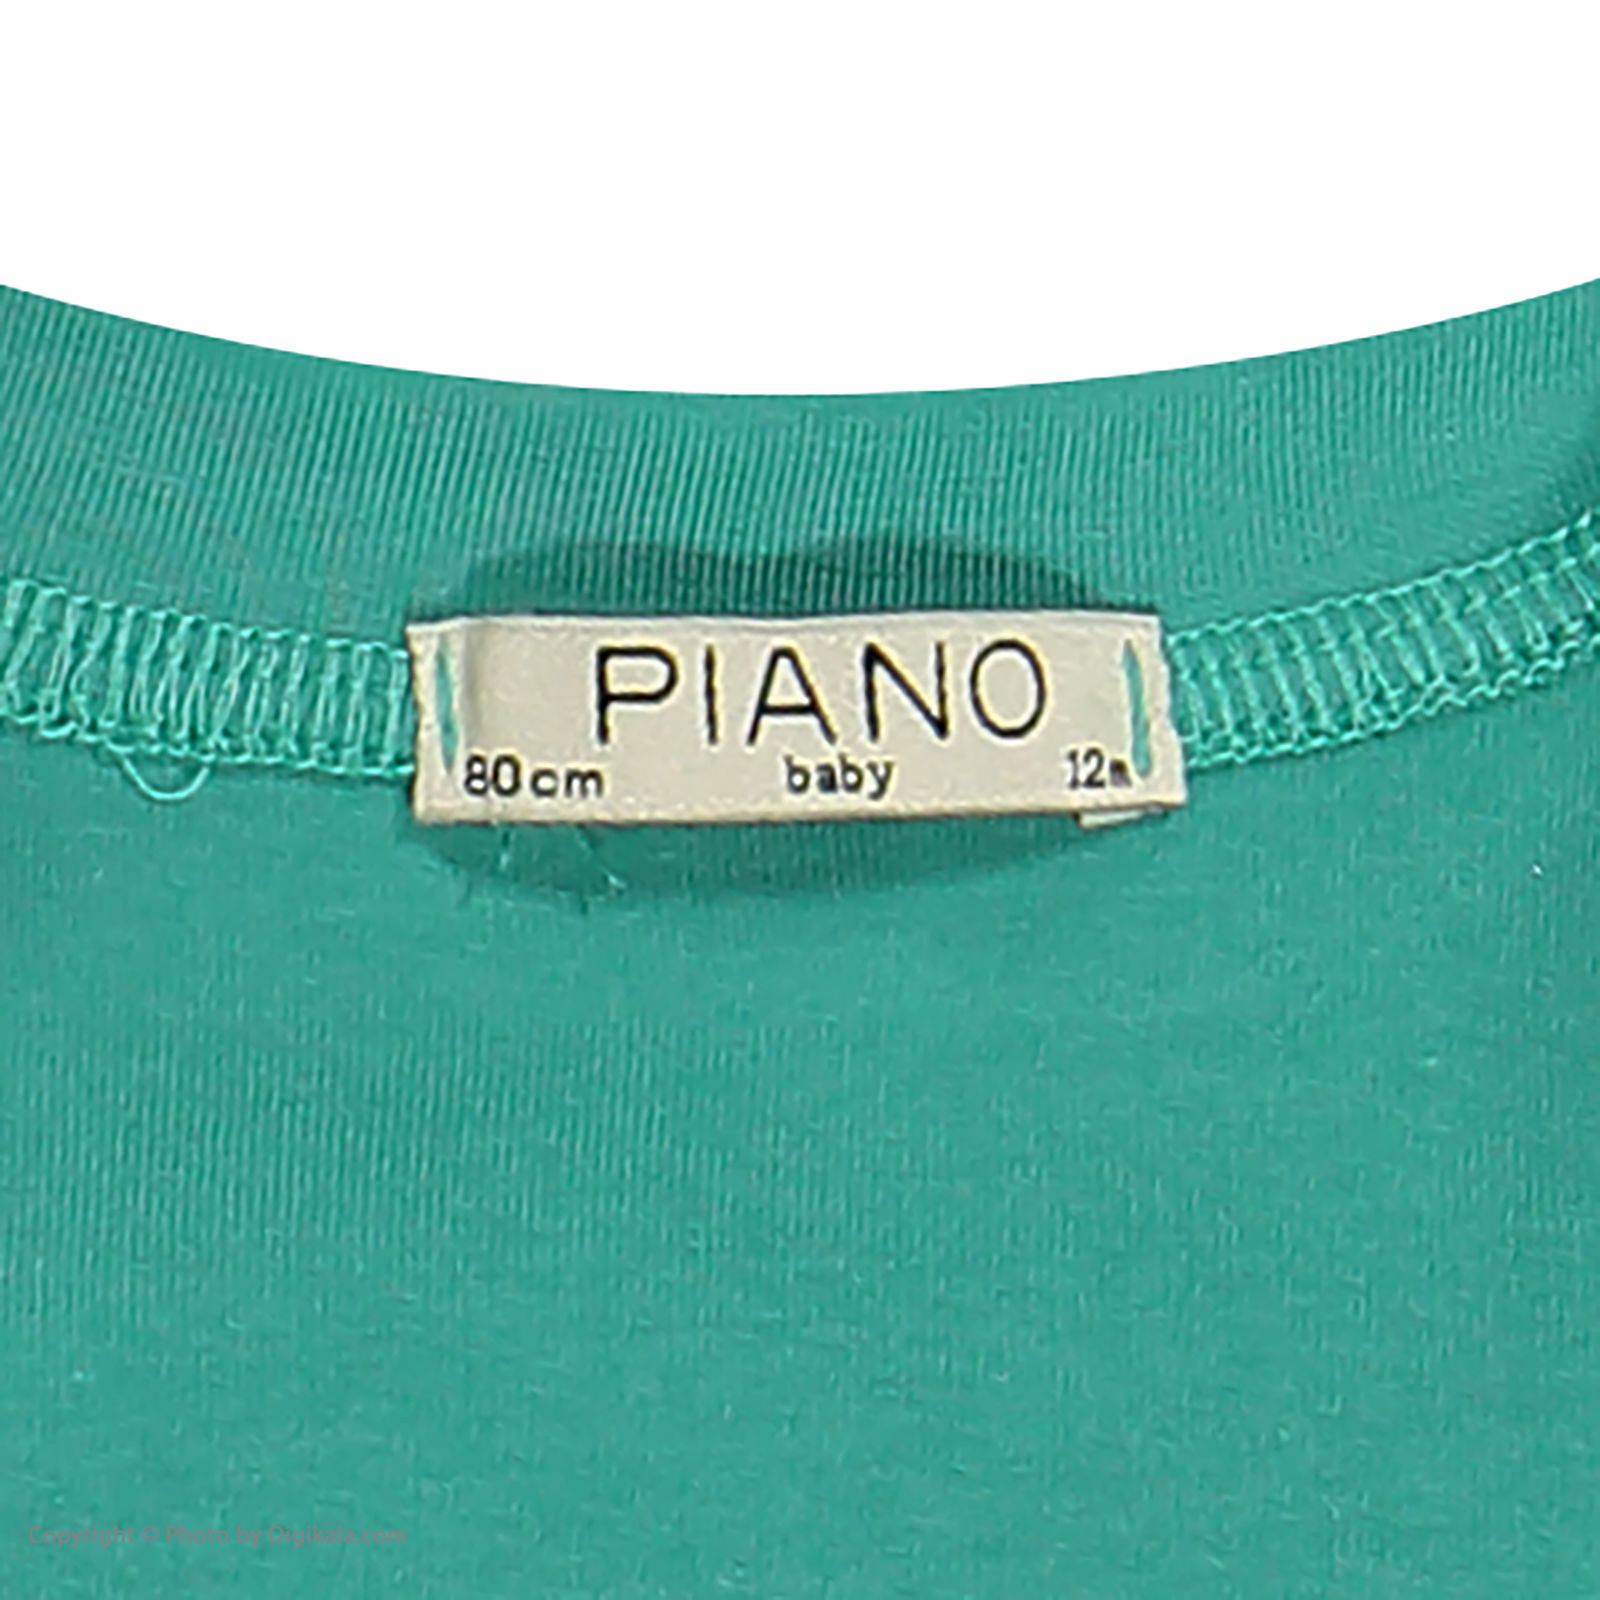 ست سویشرت و شلوار پسرانه پیانو مدل 01758-45 -  - 8